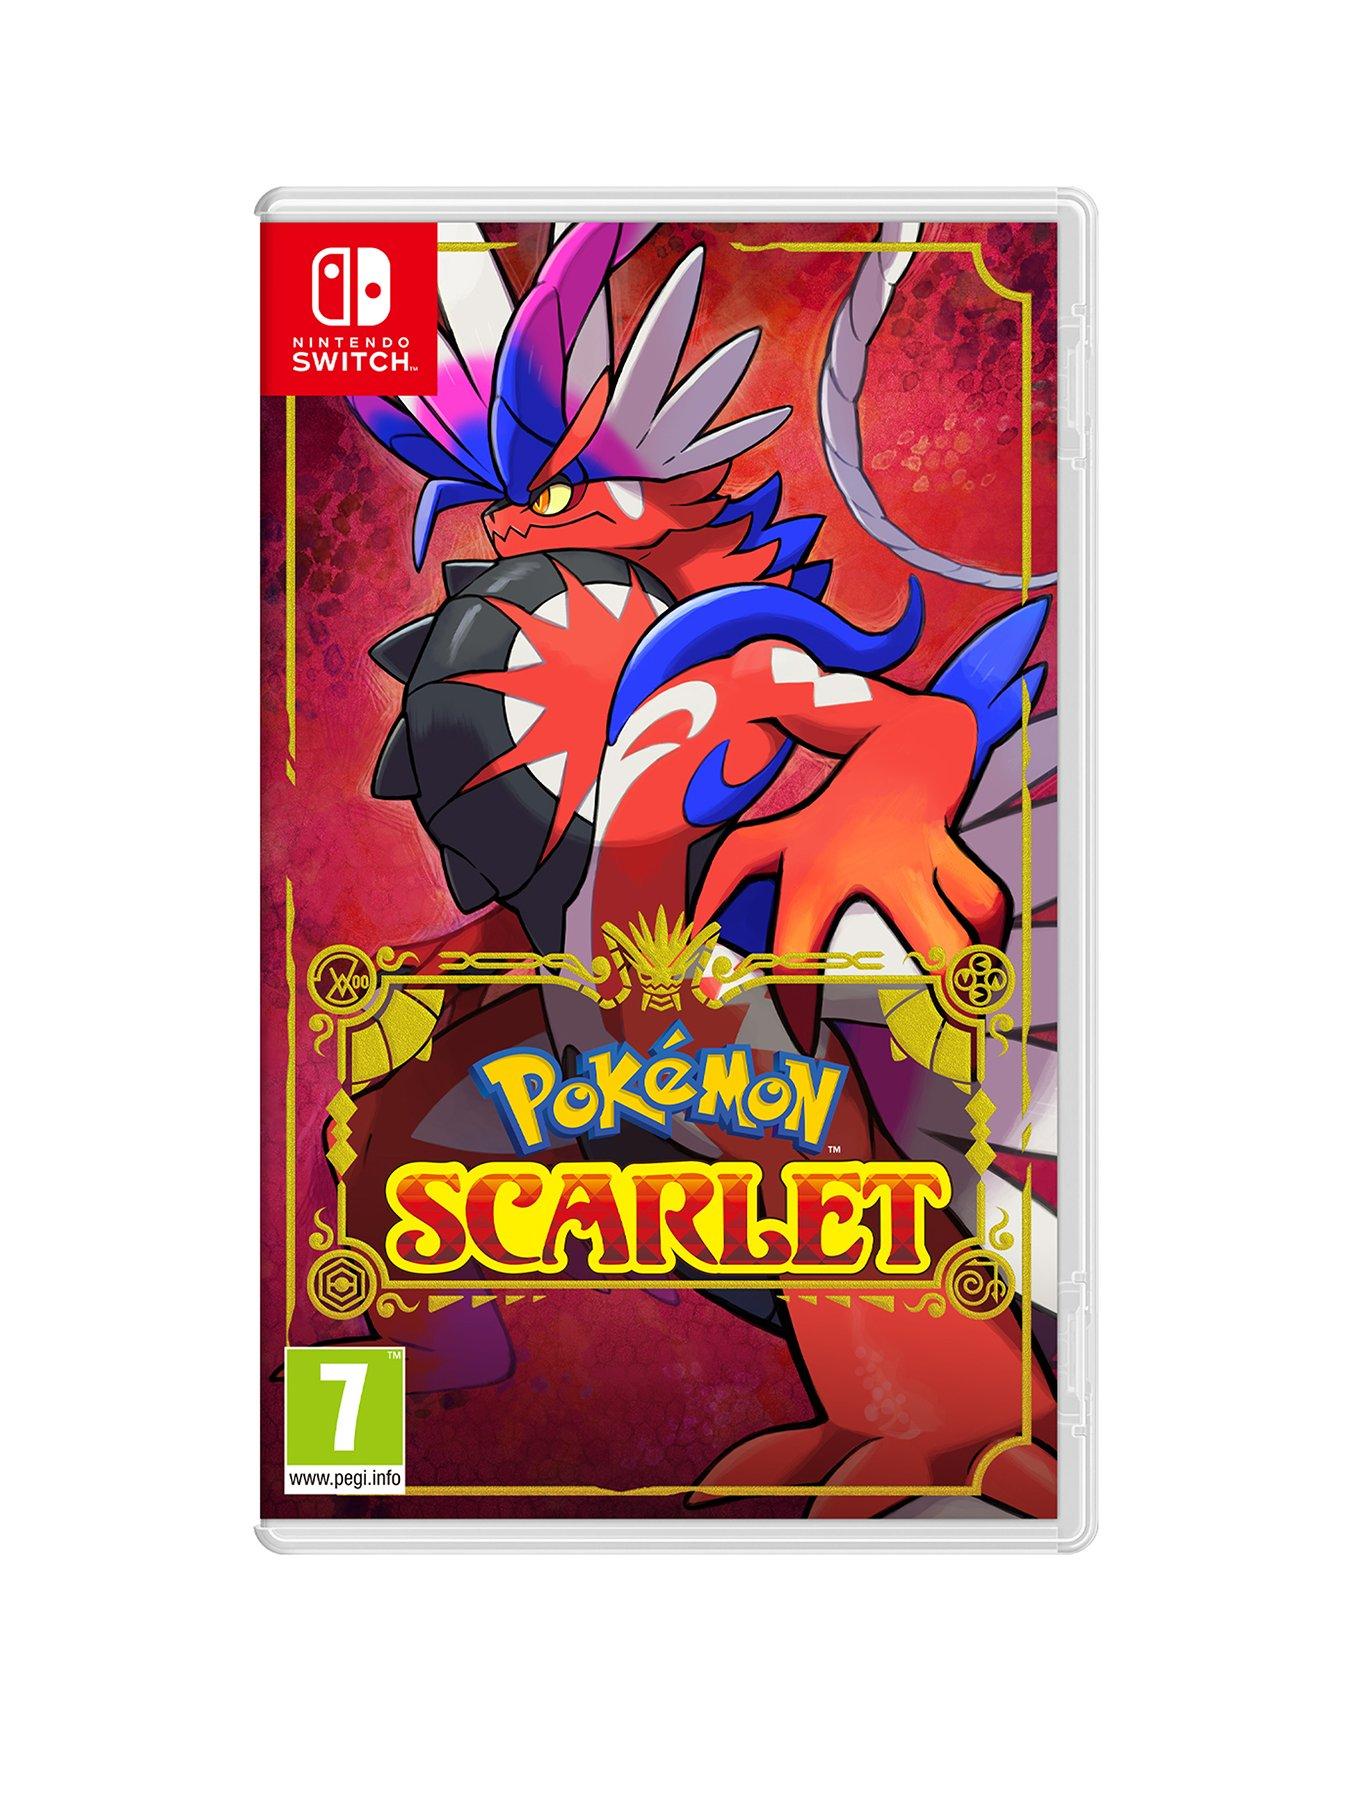 Pokémon GO gets integration with Scarlet & Violet, plus Pokémon Sleep  update